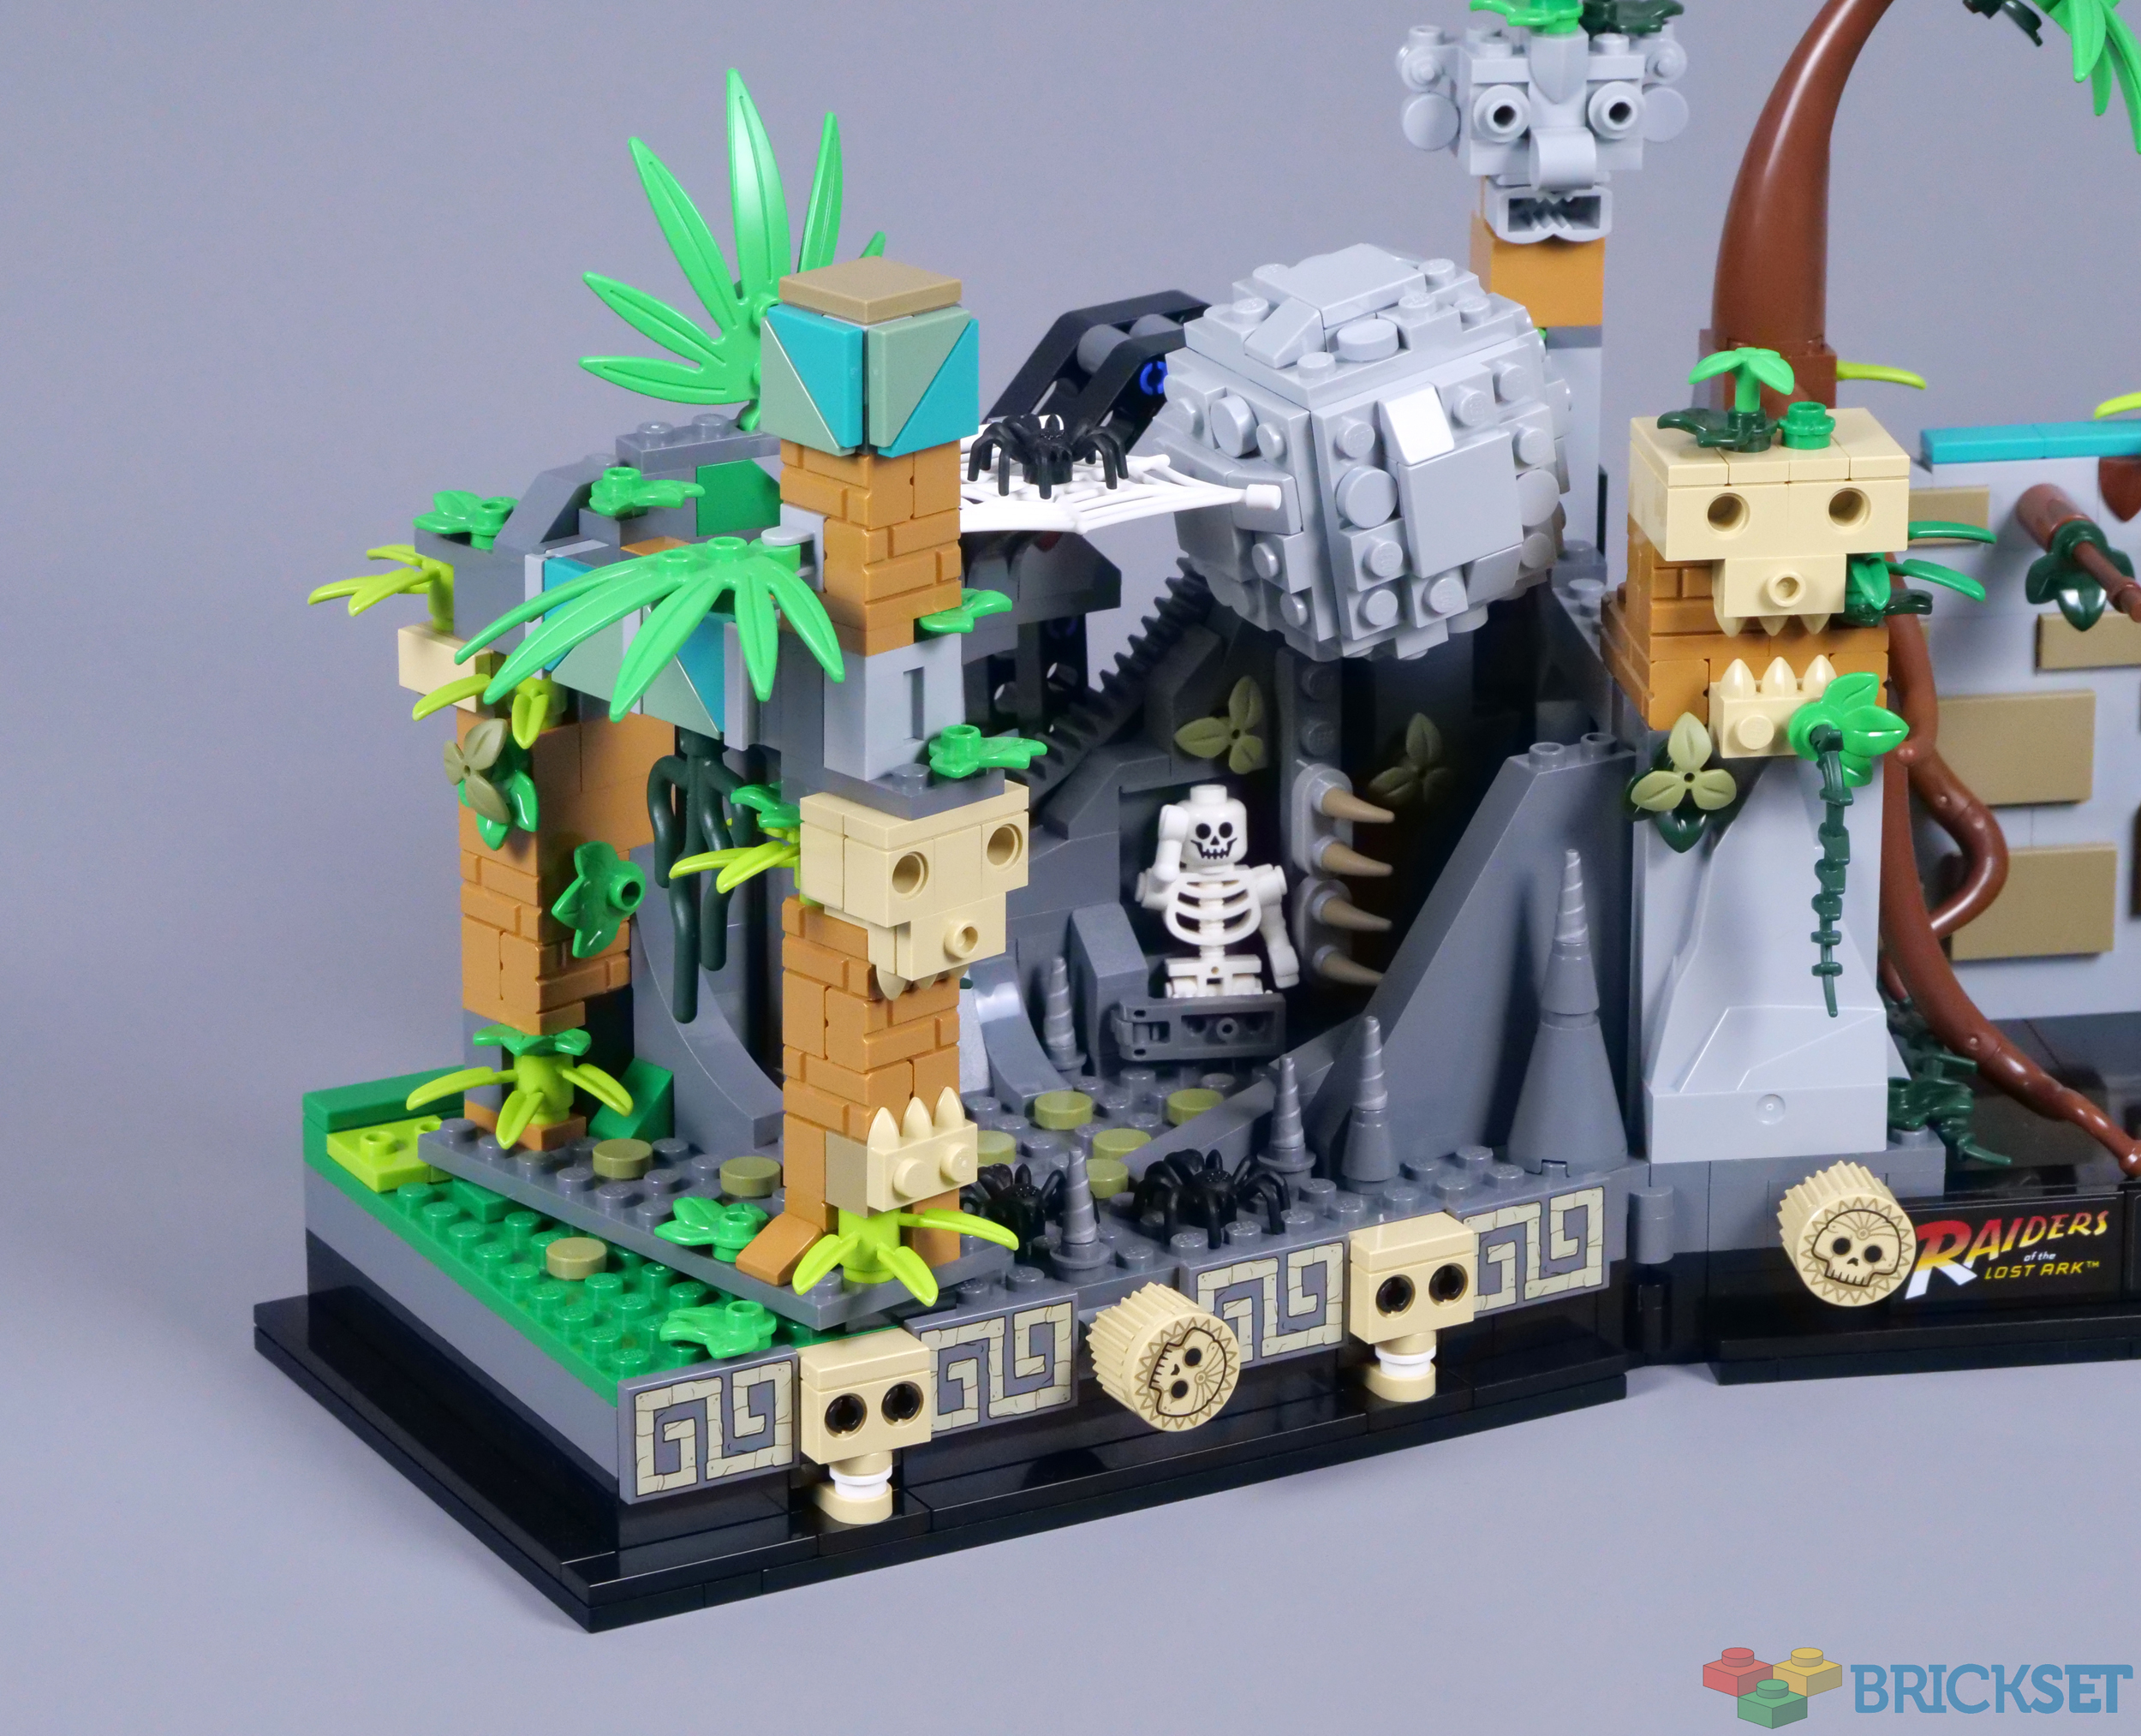 Lego's new Indiana Jones set reimagines Raiders of the Lost Ark - Polygon